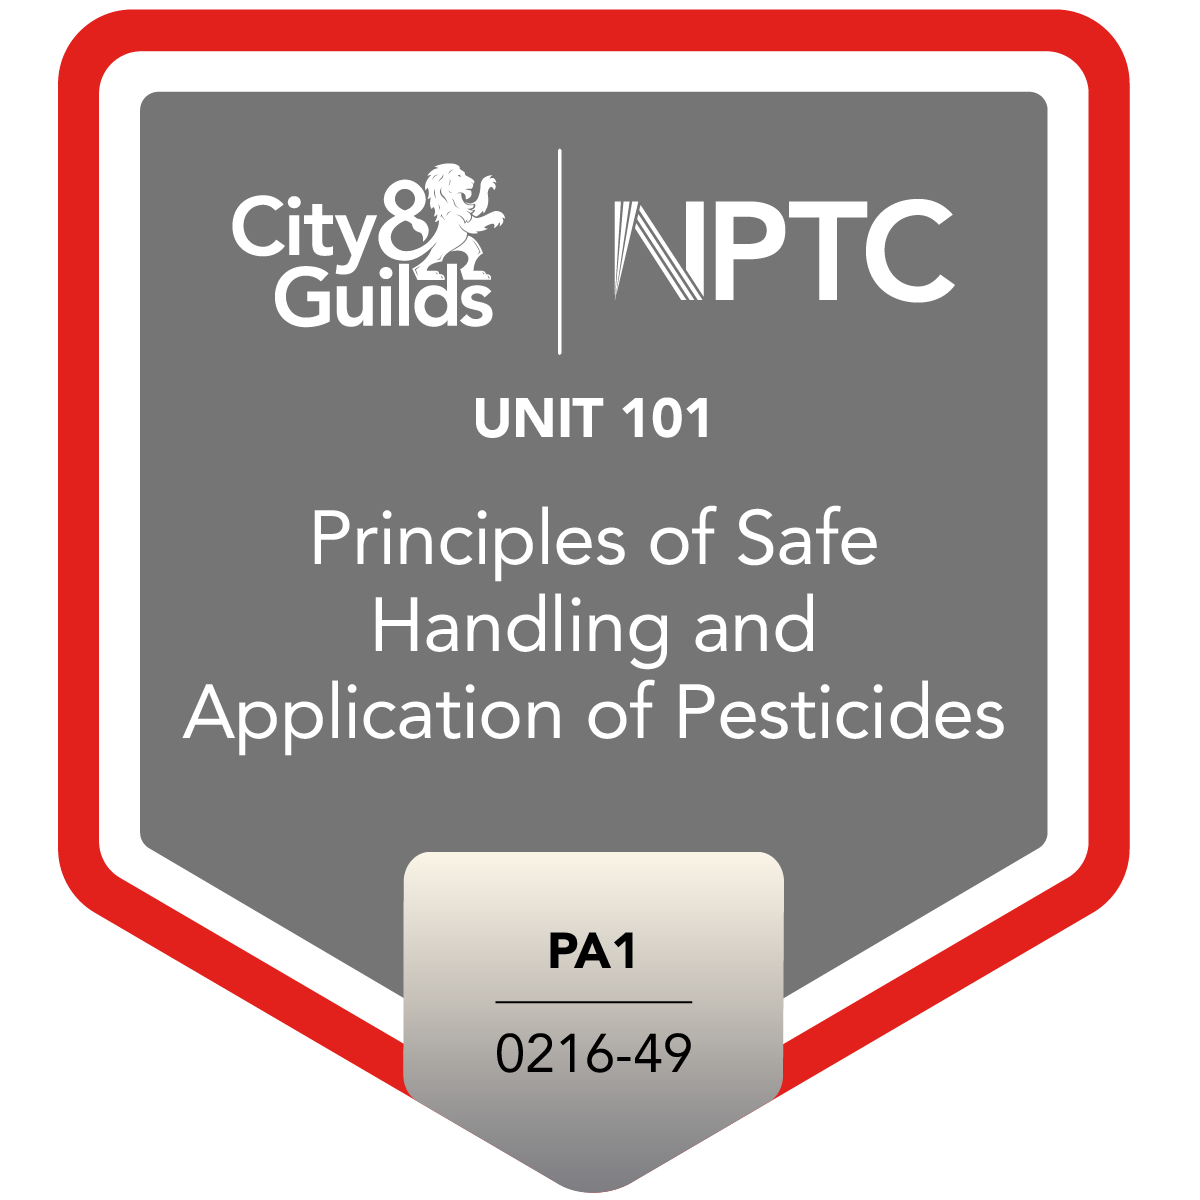 Principles of Safe Handling and Application of Pesticides